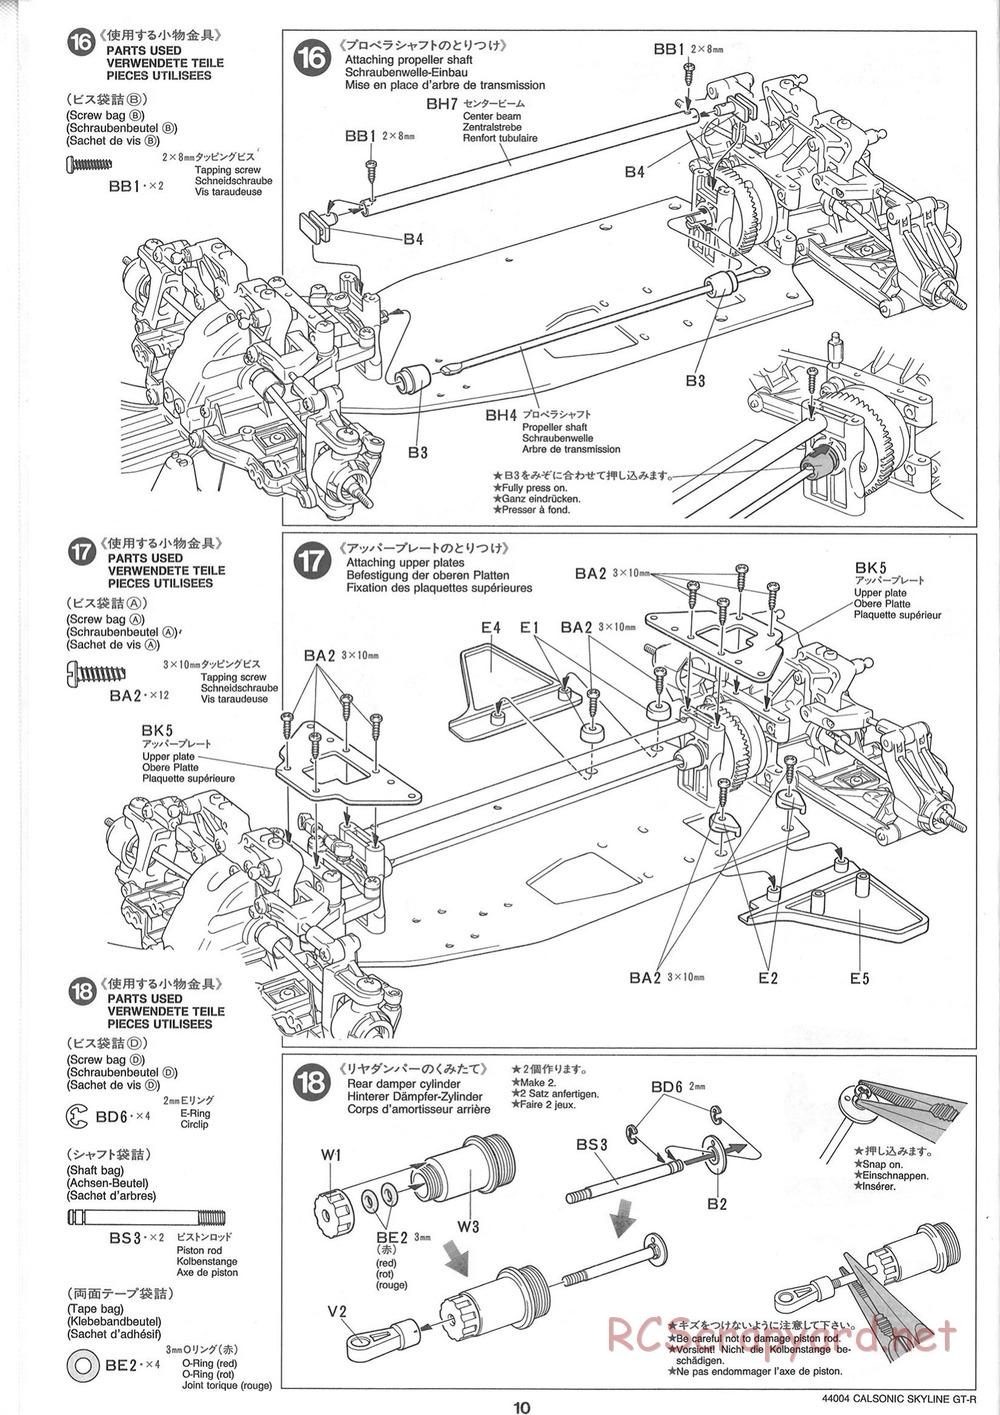 Tamiya - Calsonic GT-R - TGX Mk.1 Chassis - Manual - Page 10